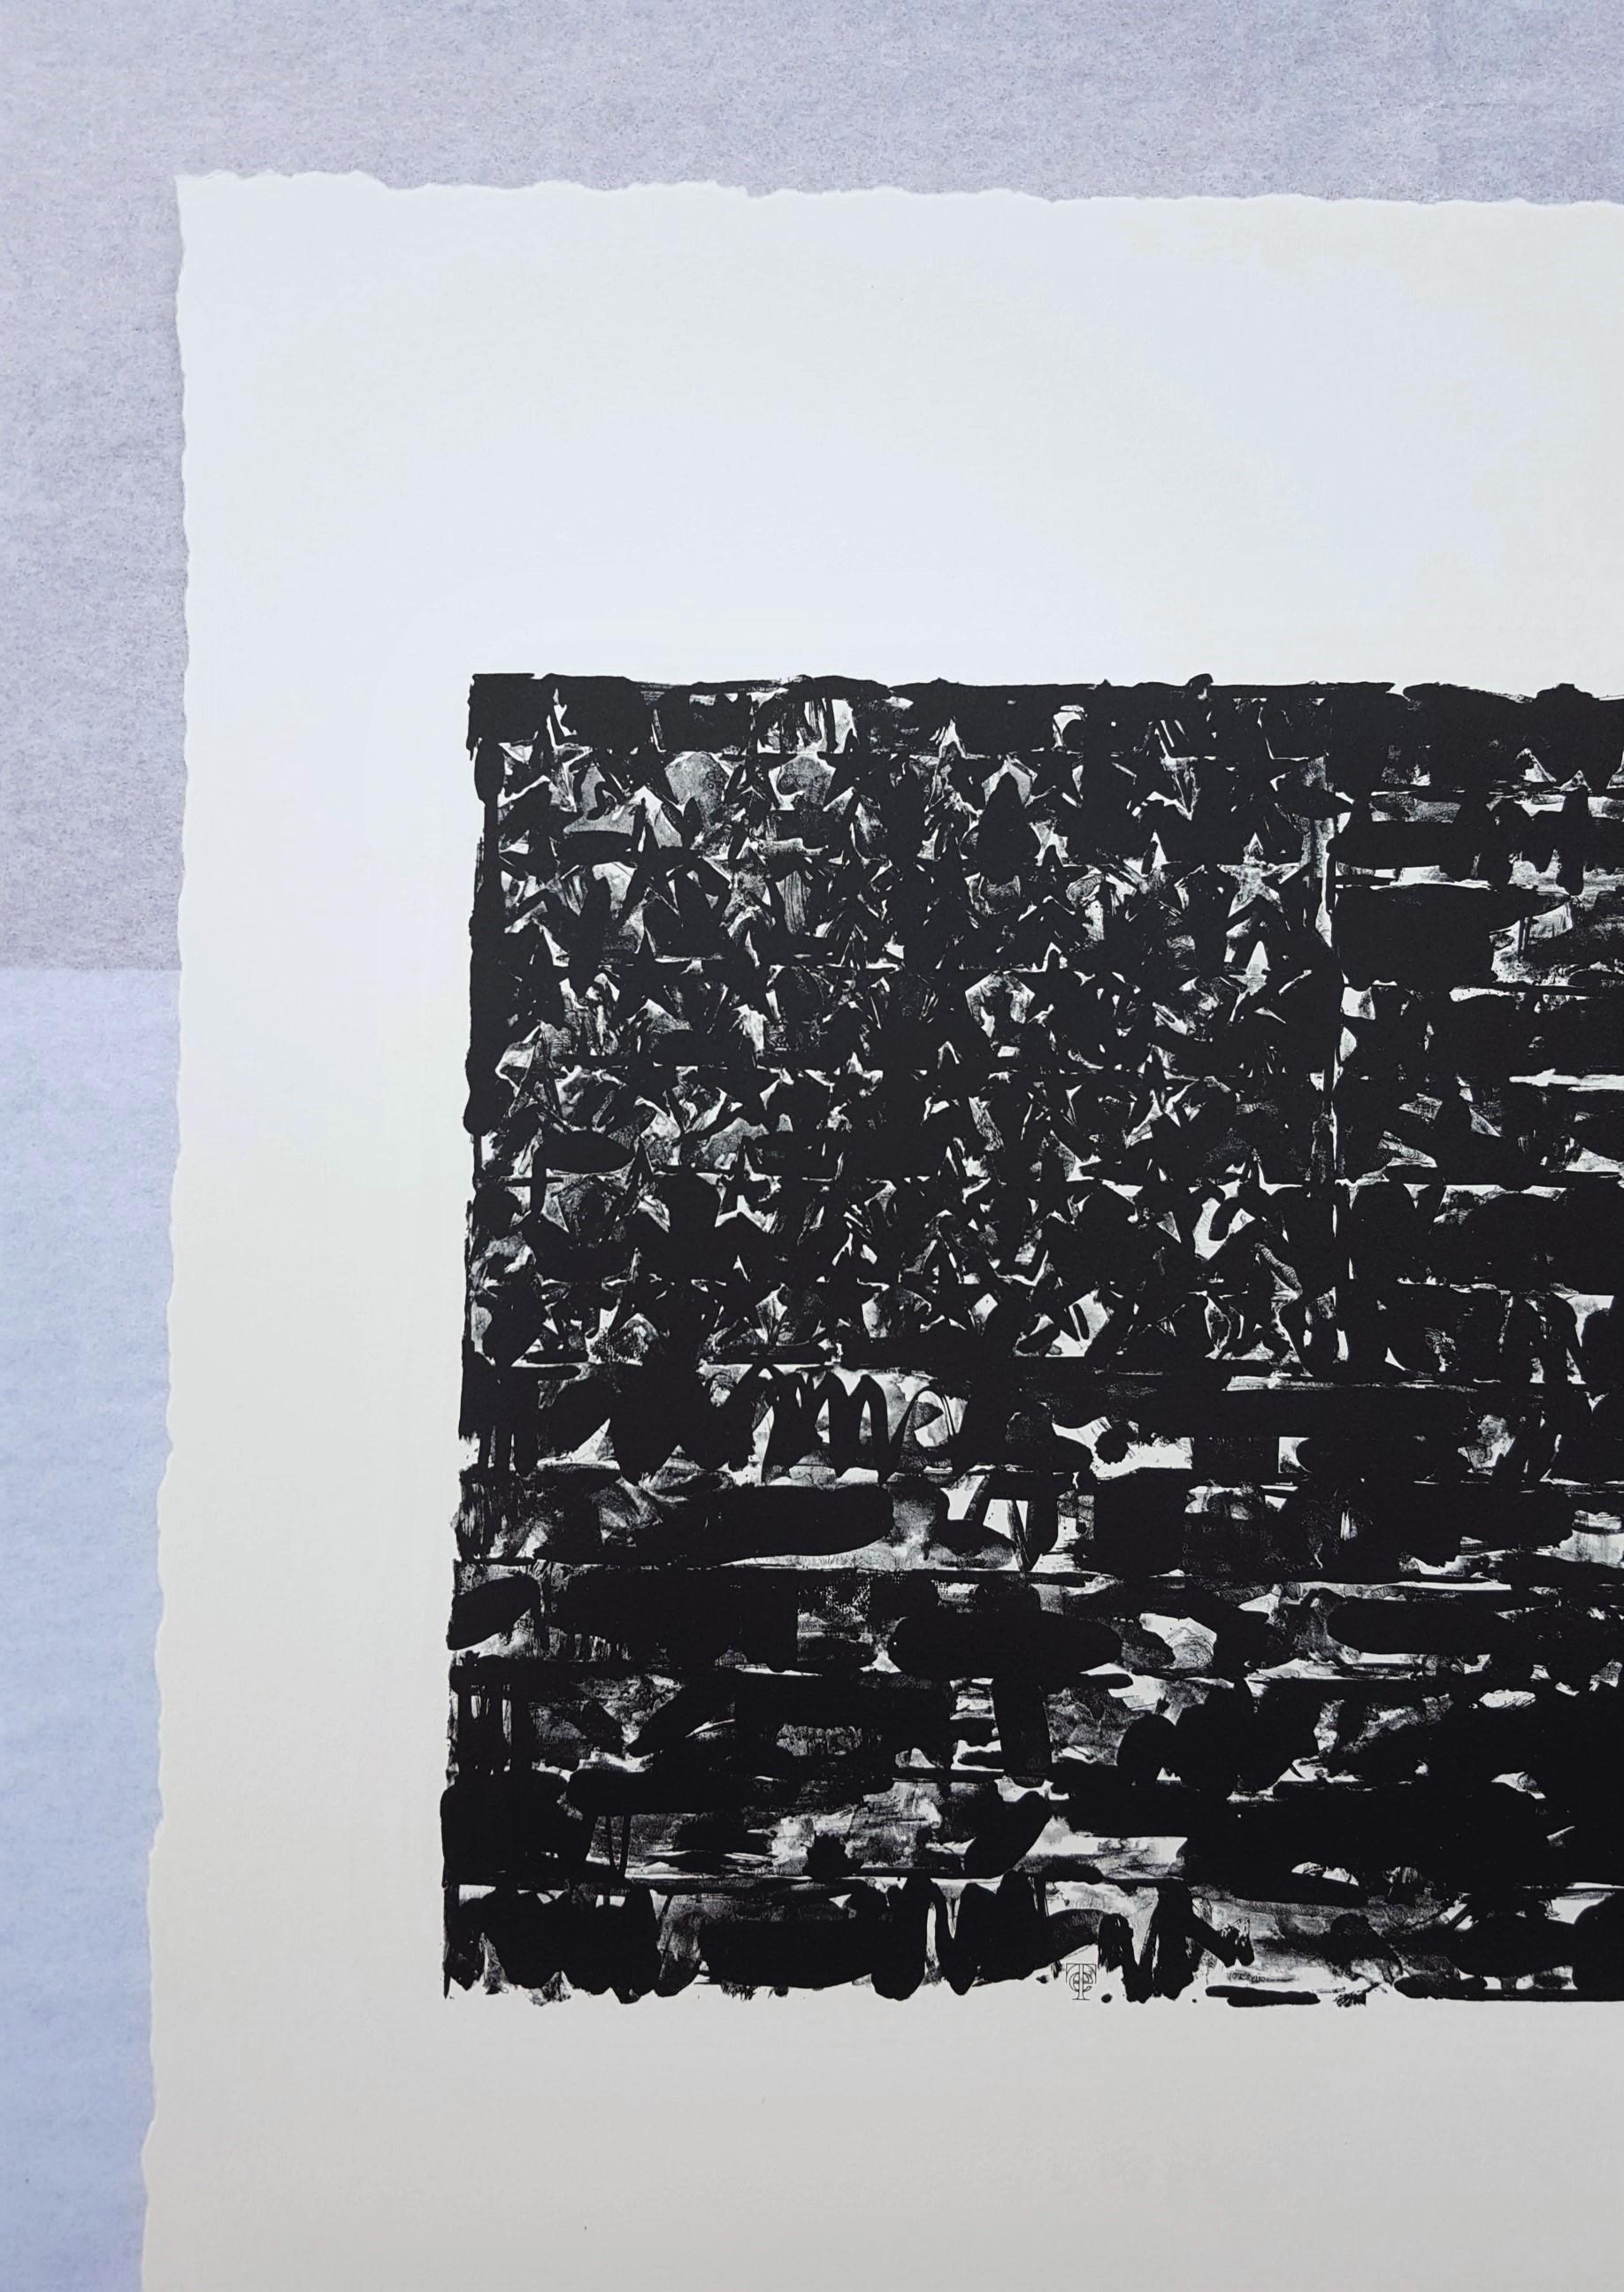 Künstler: (nach) Jasper Johns (Amerikaner, 1930-)
Titel: 